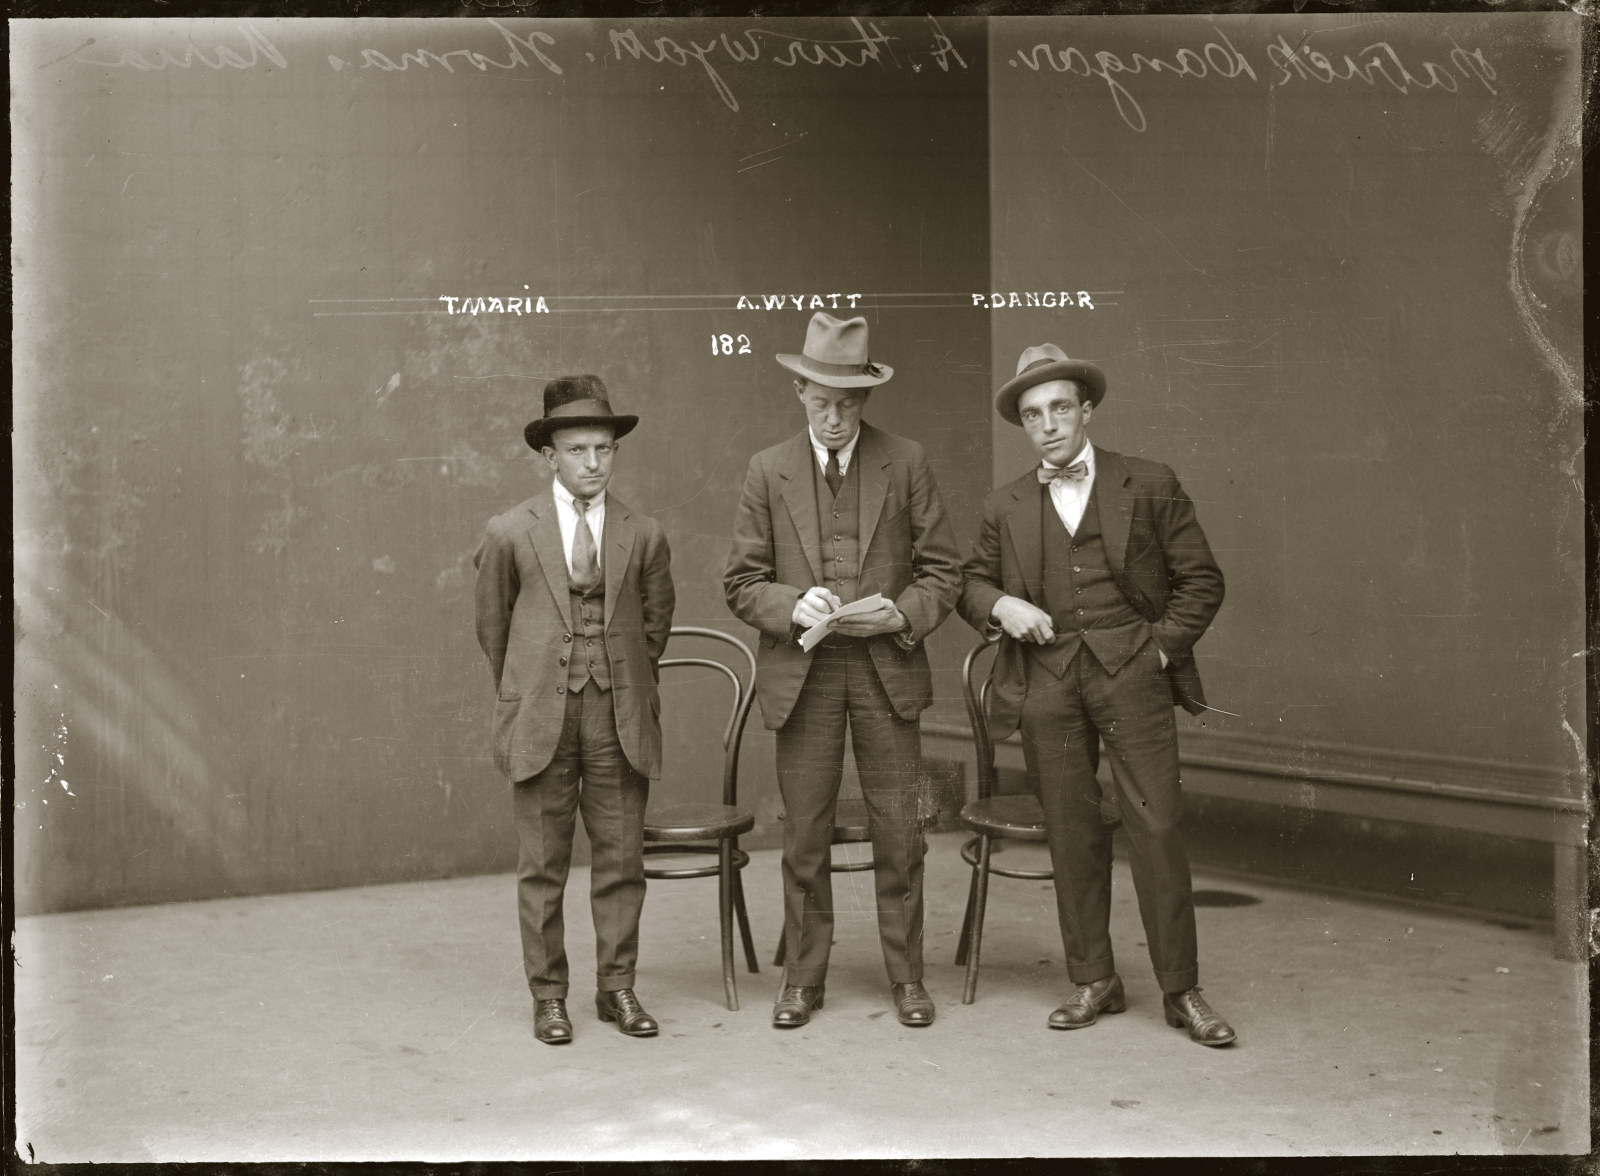 Mugshot of Thomas Maria, Arthur Wyatt, and Patrick Dangar (alias Brosnan), Central Police Station, ca. 1920. 